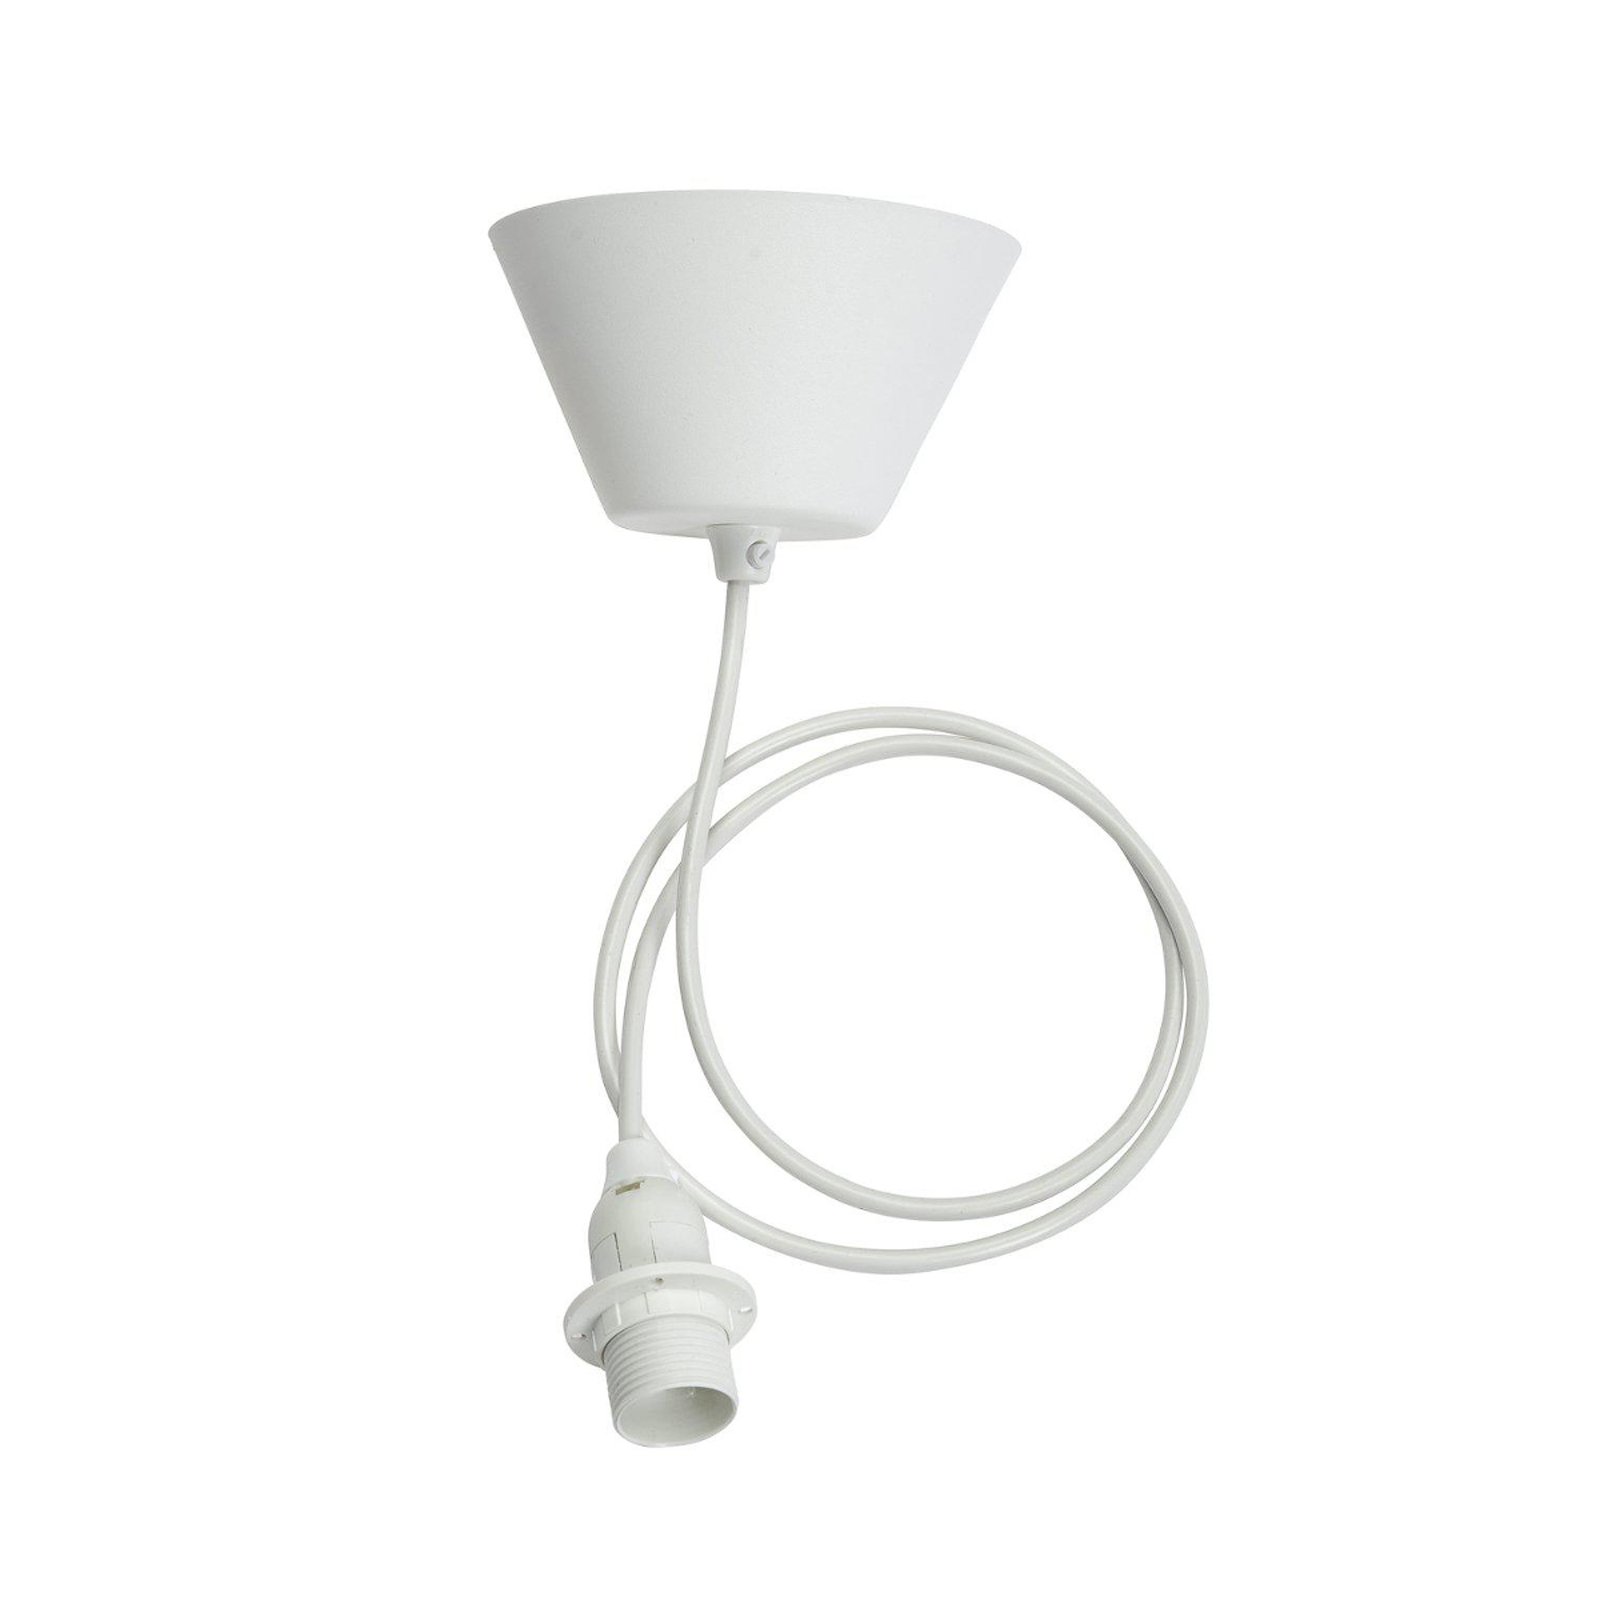 PR Home hanging light Sani, Ø44.5cm, white, white suspension system, E14